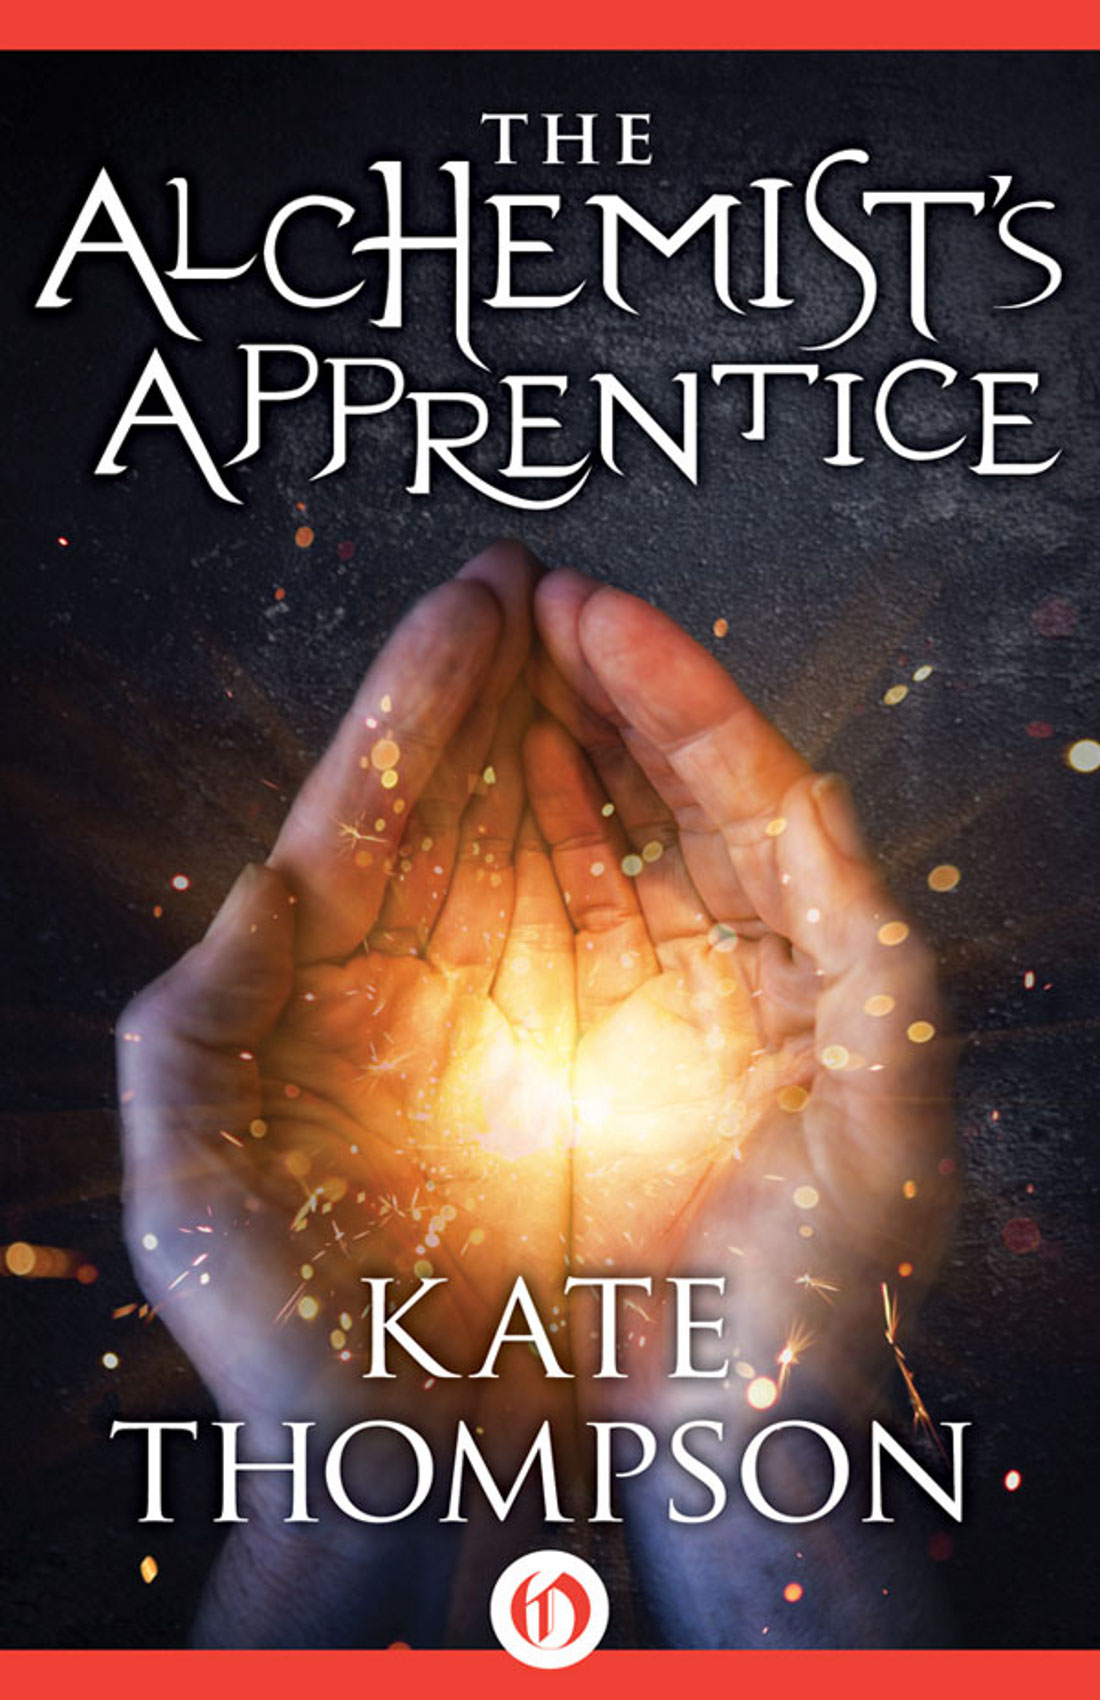 Alchemist's Apprentice by Kate Thompson